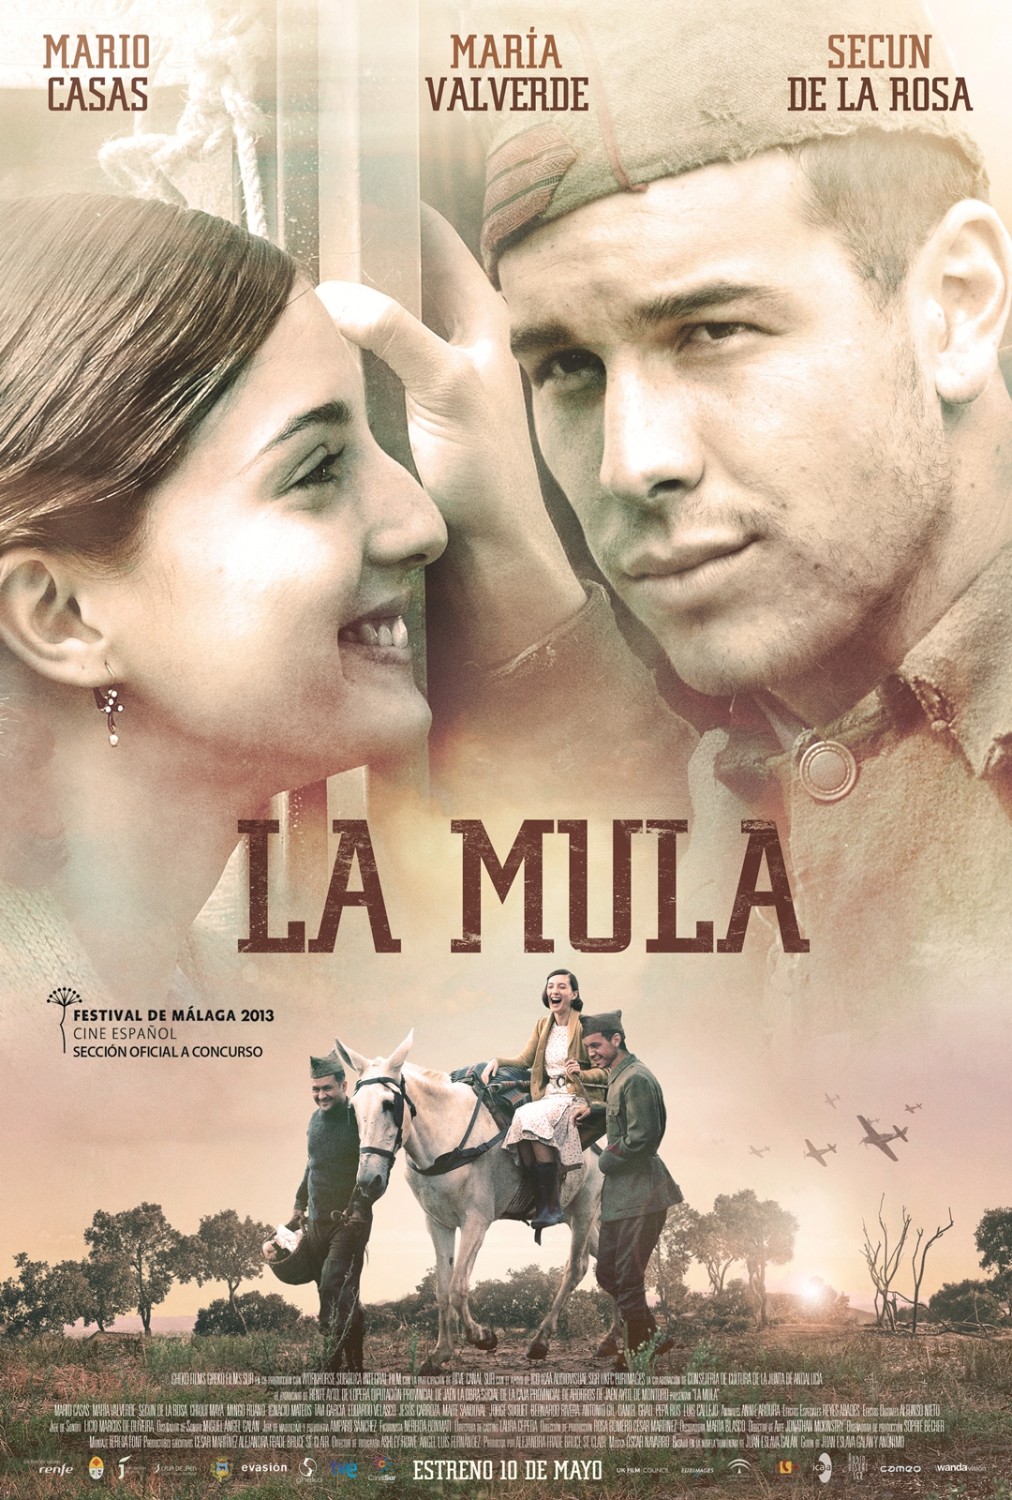 Extra Large Movie Poster Image for La mula 